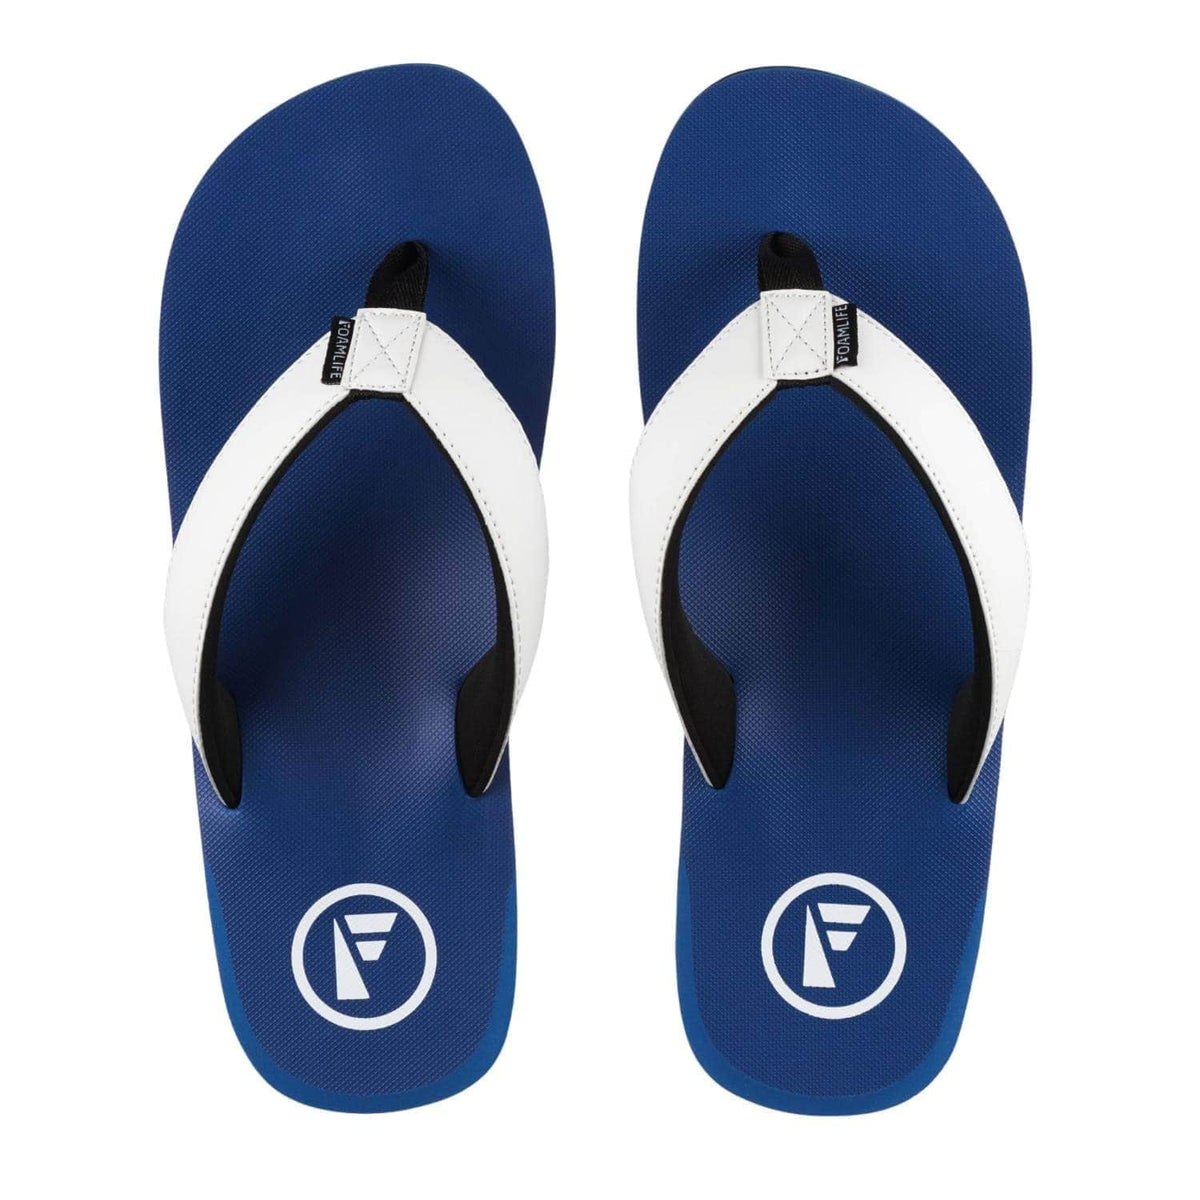 FoamLife Traa Flip Flops - Cobalt Blue - Mens Flip Flops by FoamLife